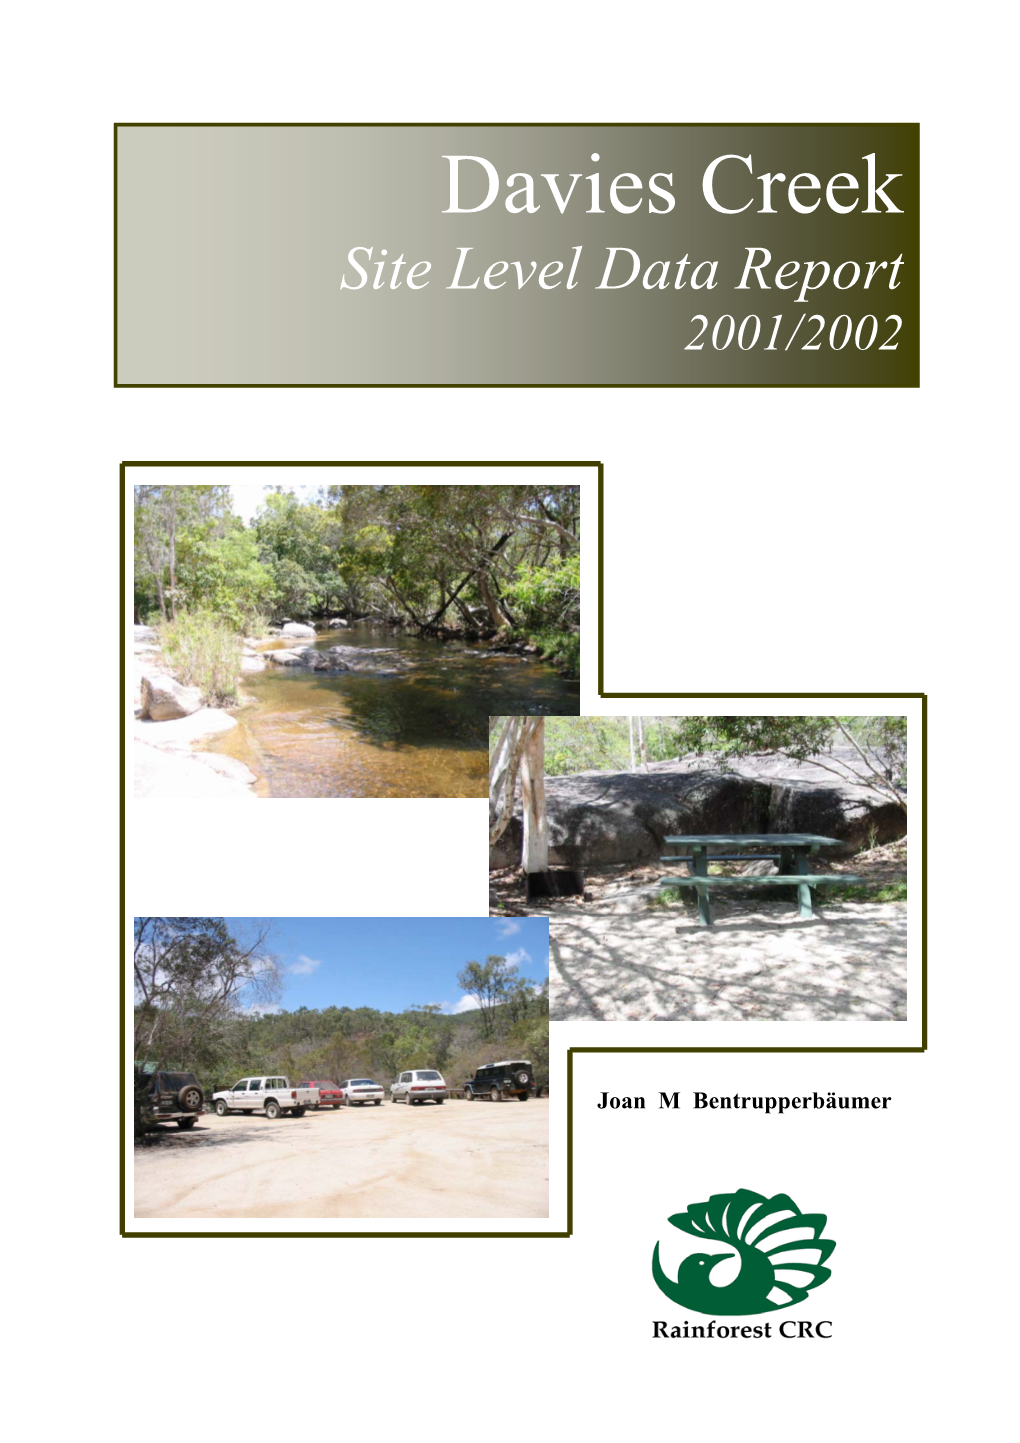 Davies Creek Site Level Data Report 2001/2002